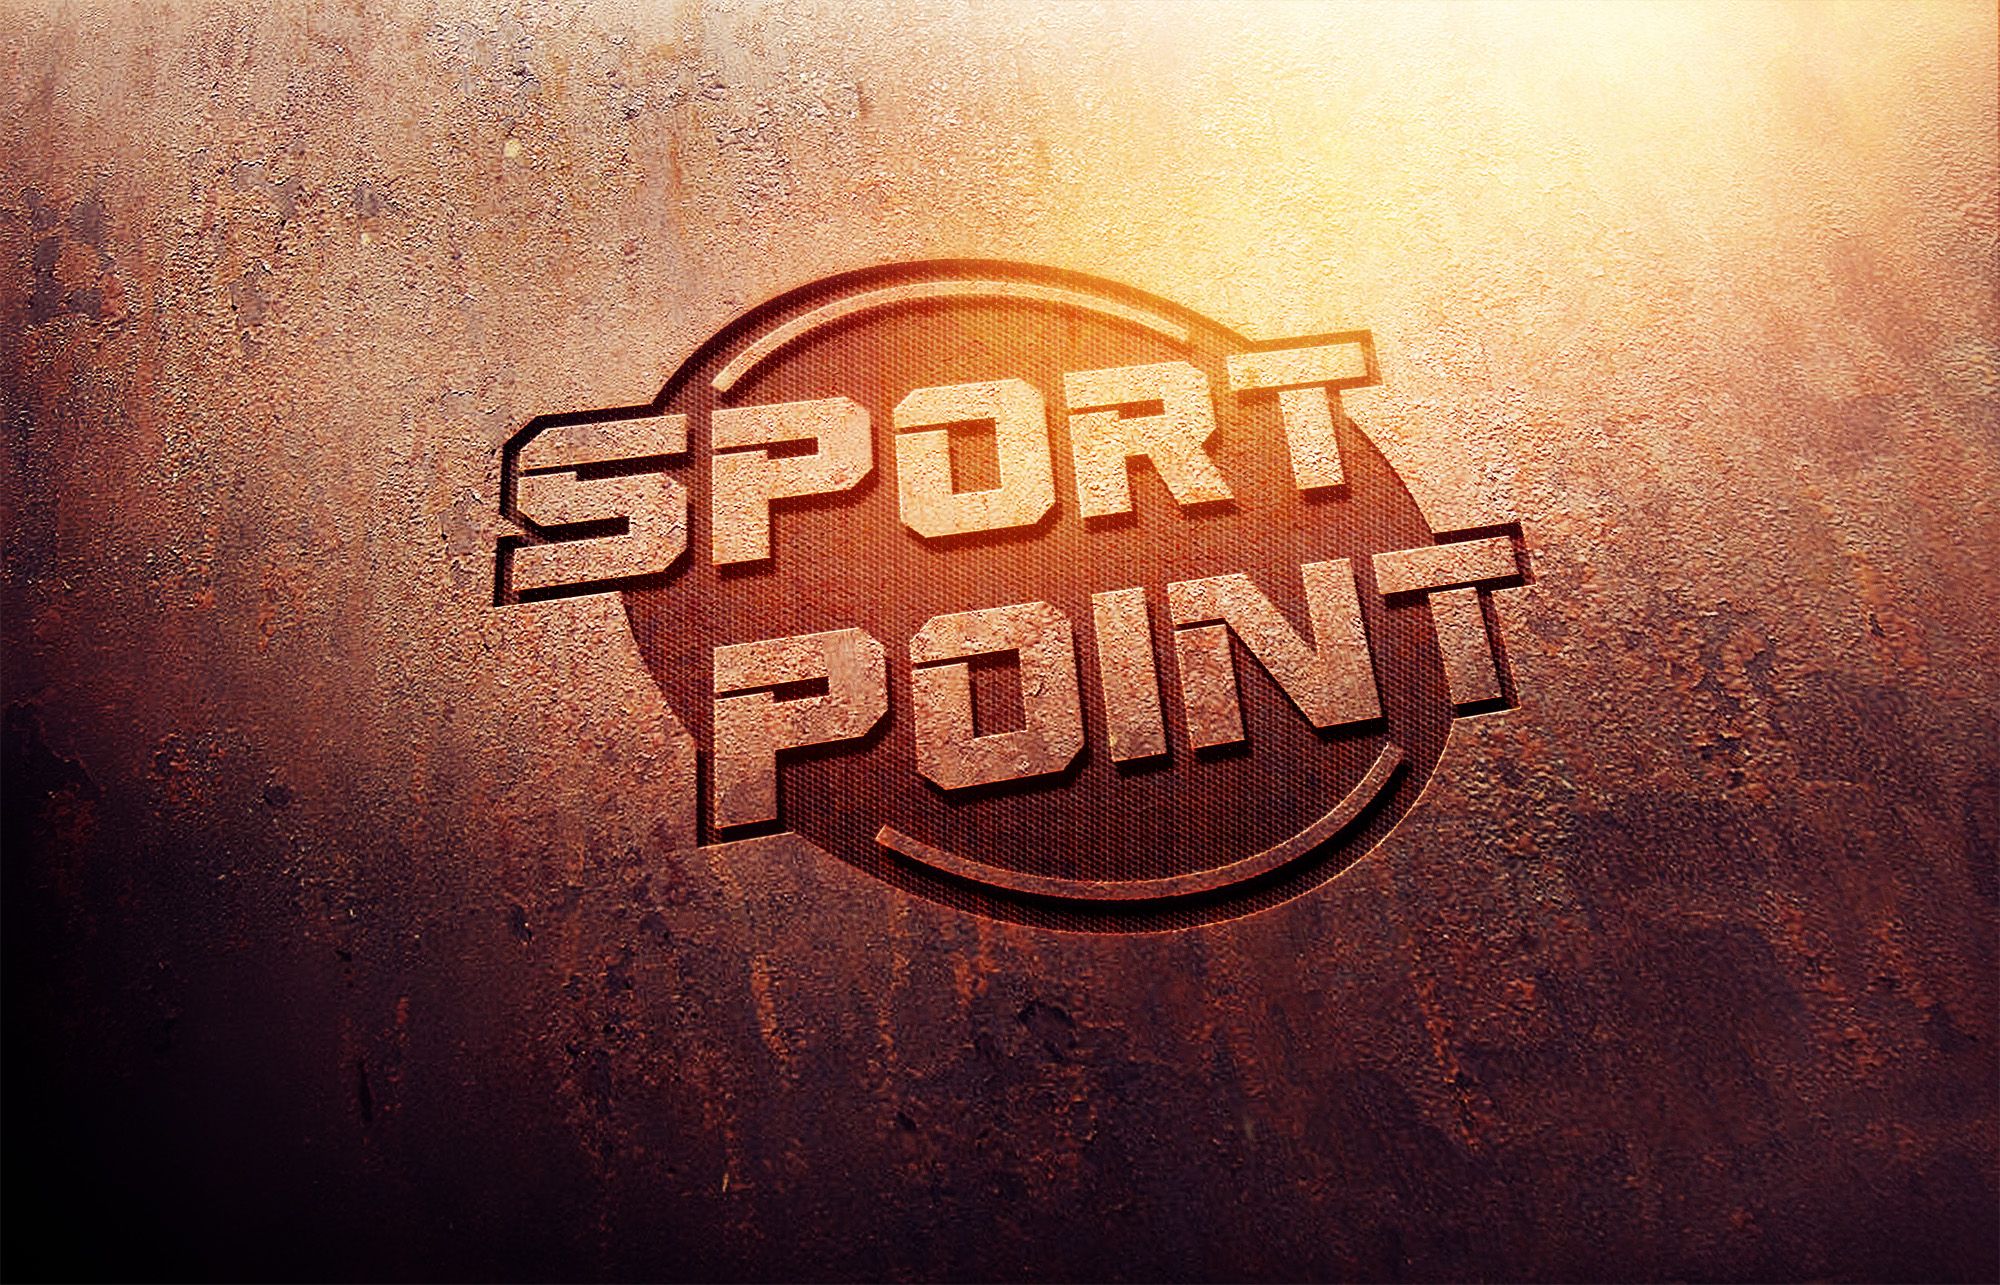 Брендбук для sport point - дизайнер serz4868